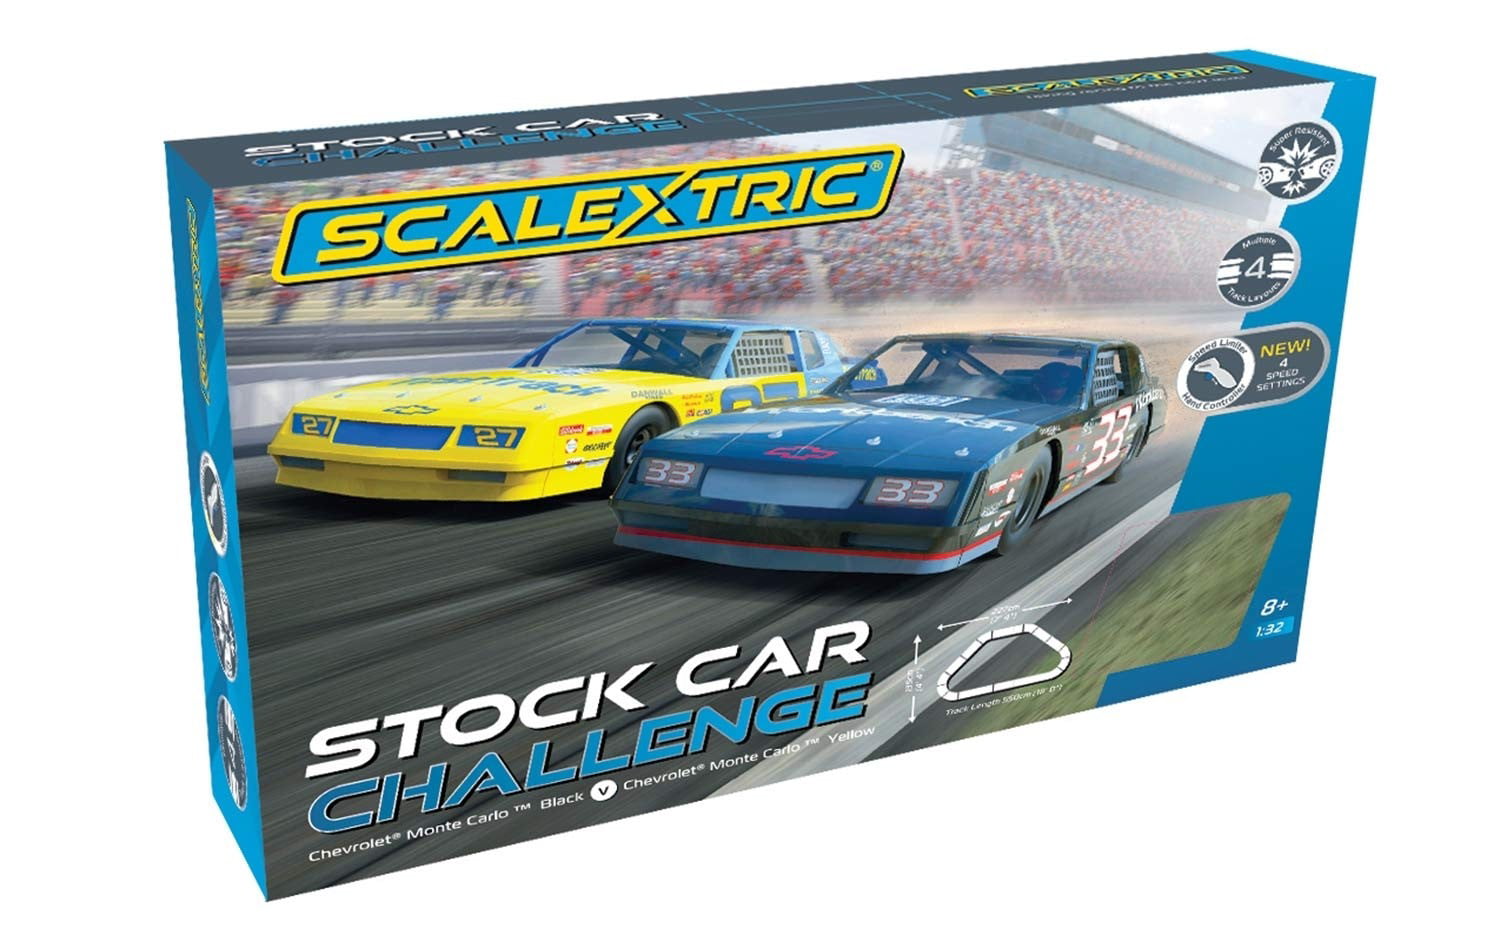 Scalextric Stock Car Challenge 1:32 Race Track Slot Car Set C1383T